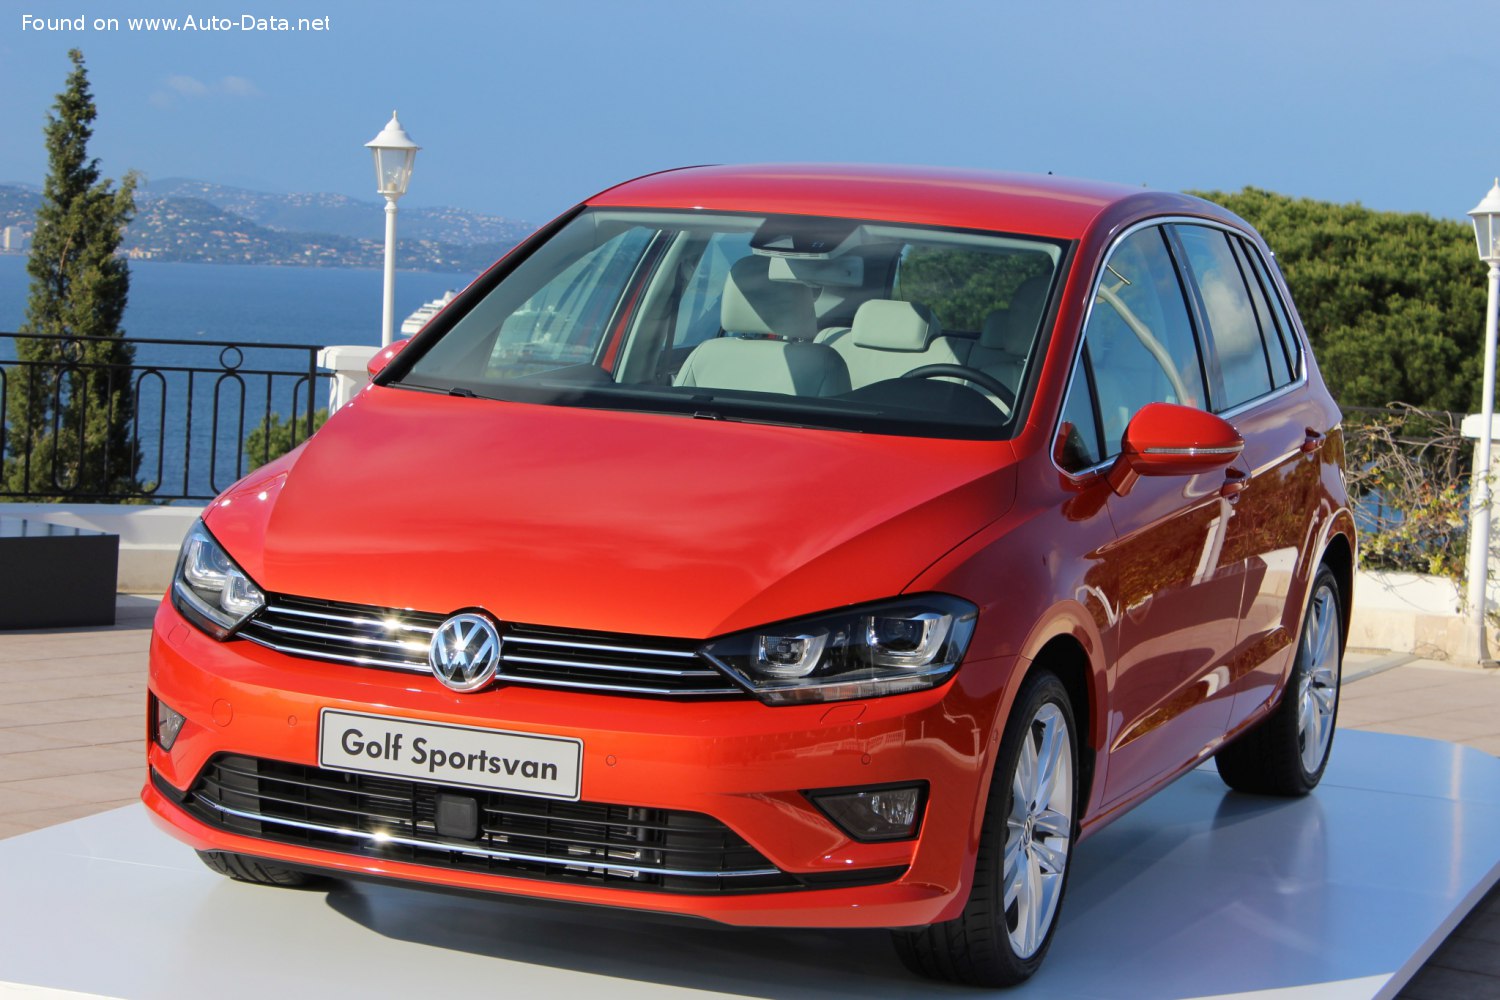 Volkswagen Golf Sportsvan: La Golf tendance monospace